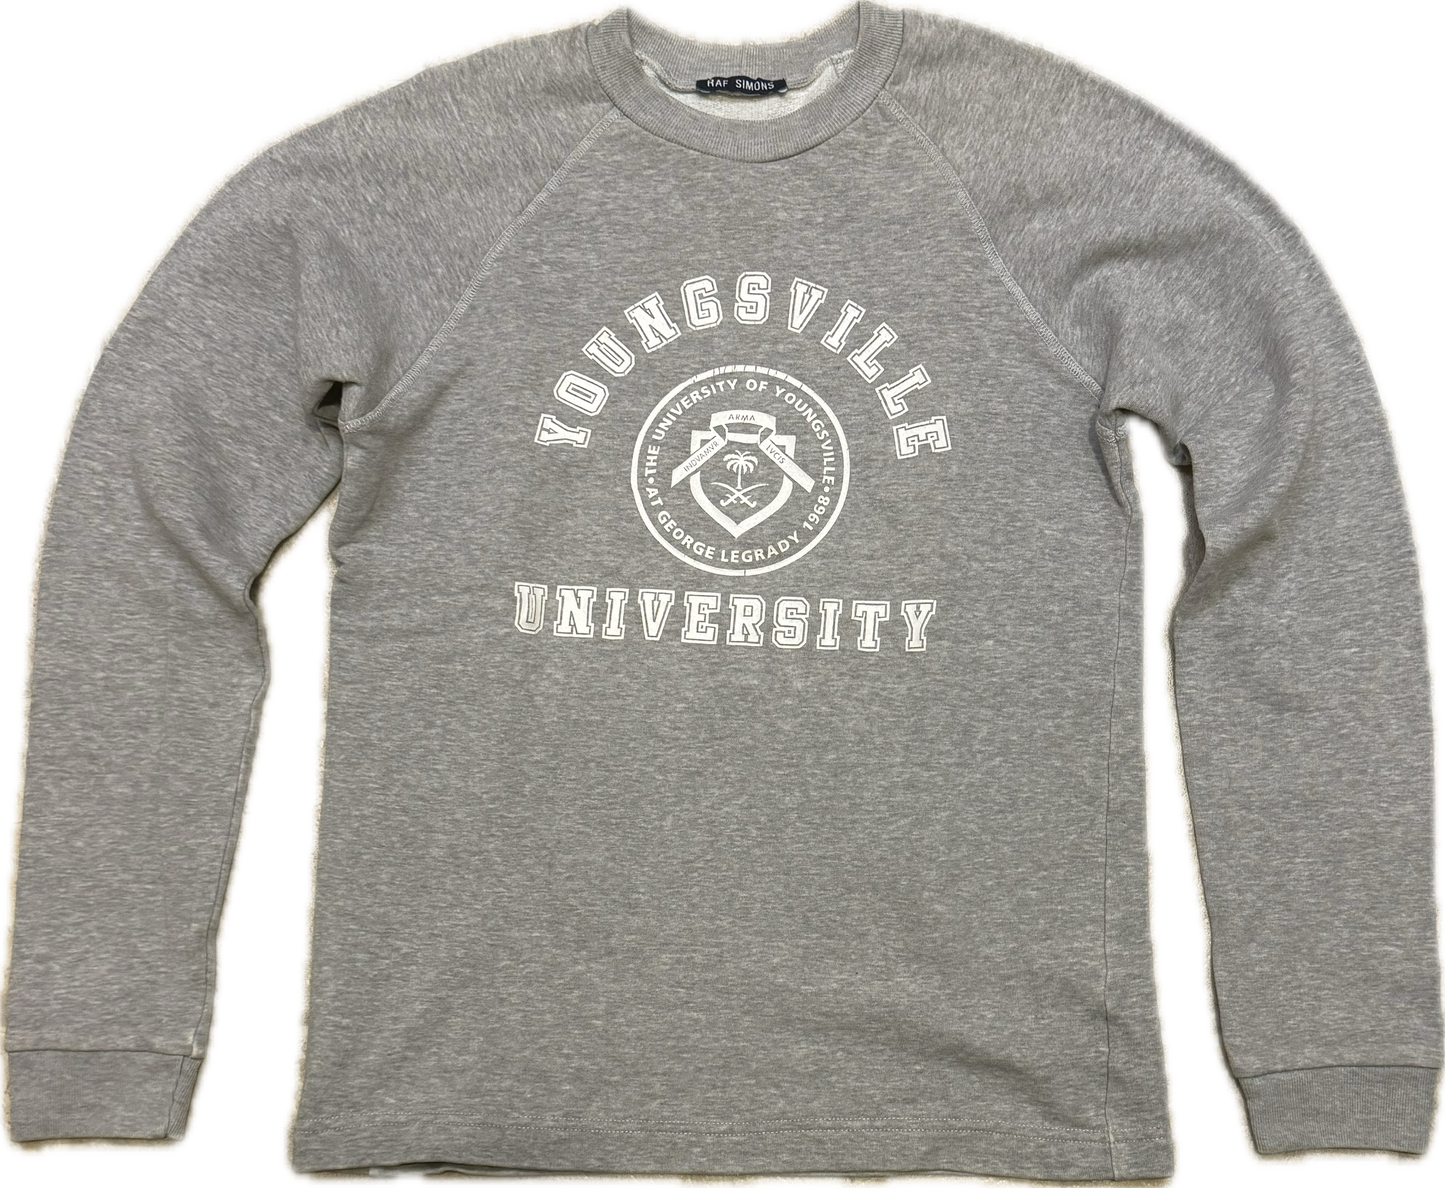 Raf Simons AW 1997 Youngsville University Crewneck Sweatshirt